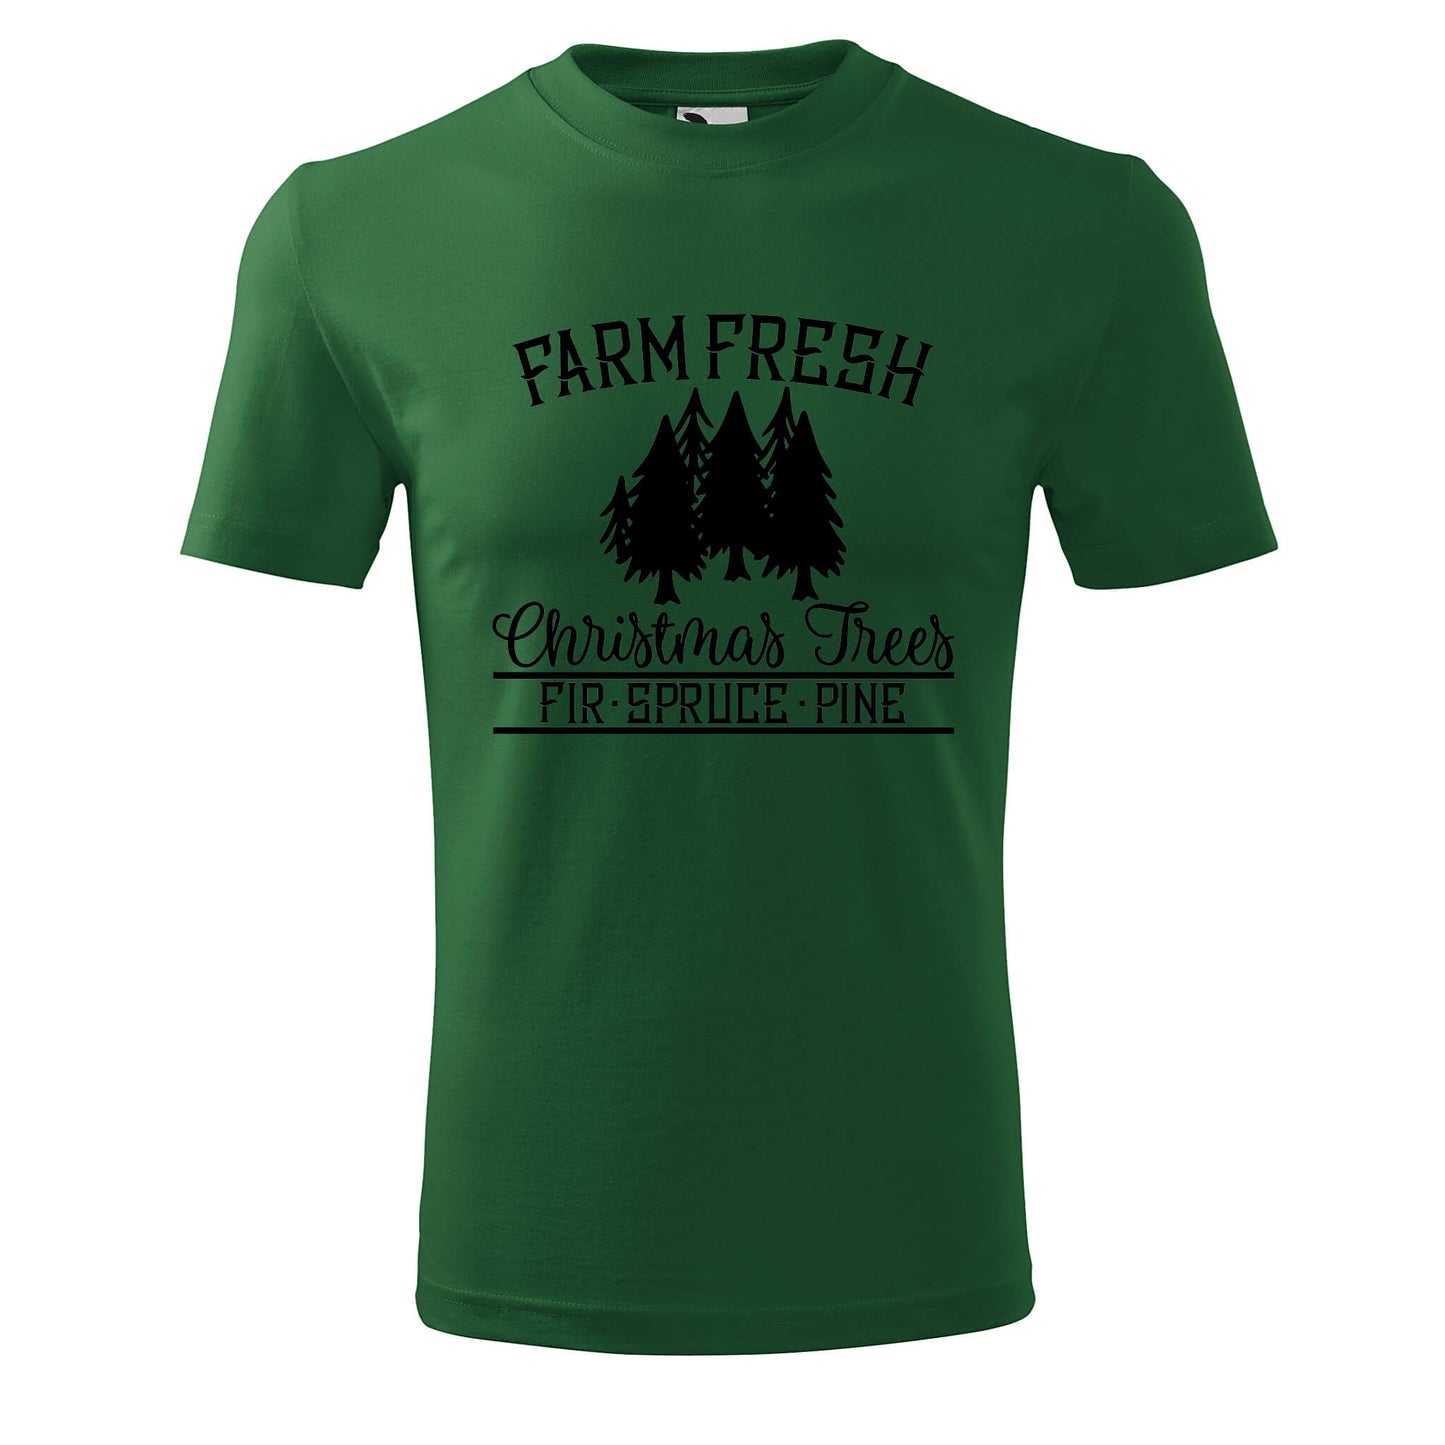 Farm fresh christmas trees t-shirt - rvdesignprint